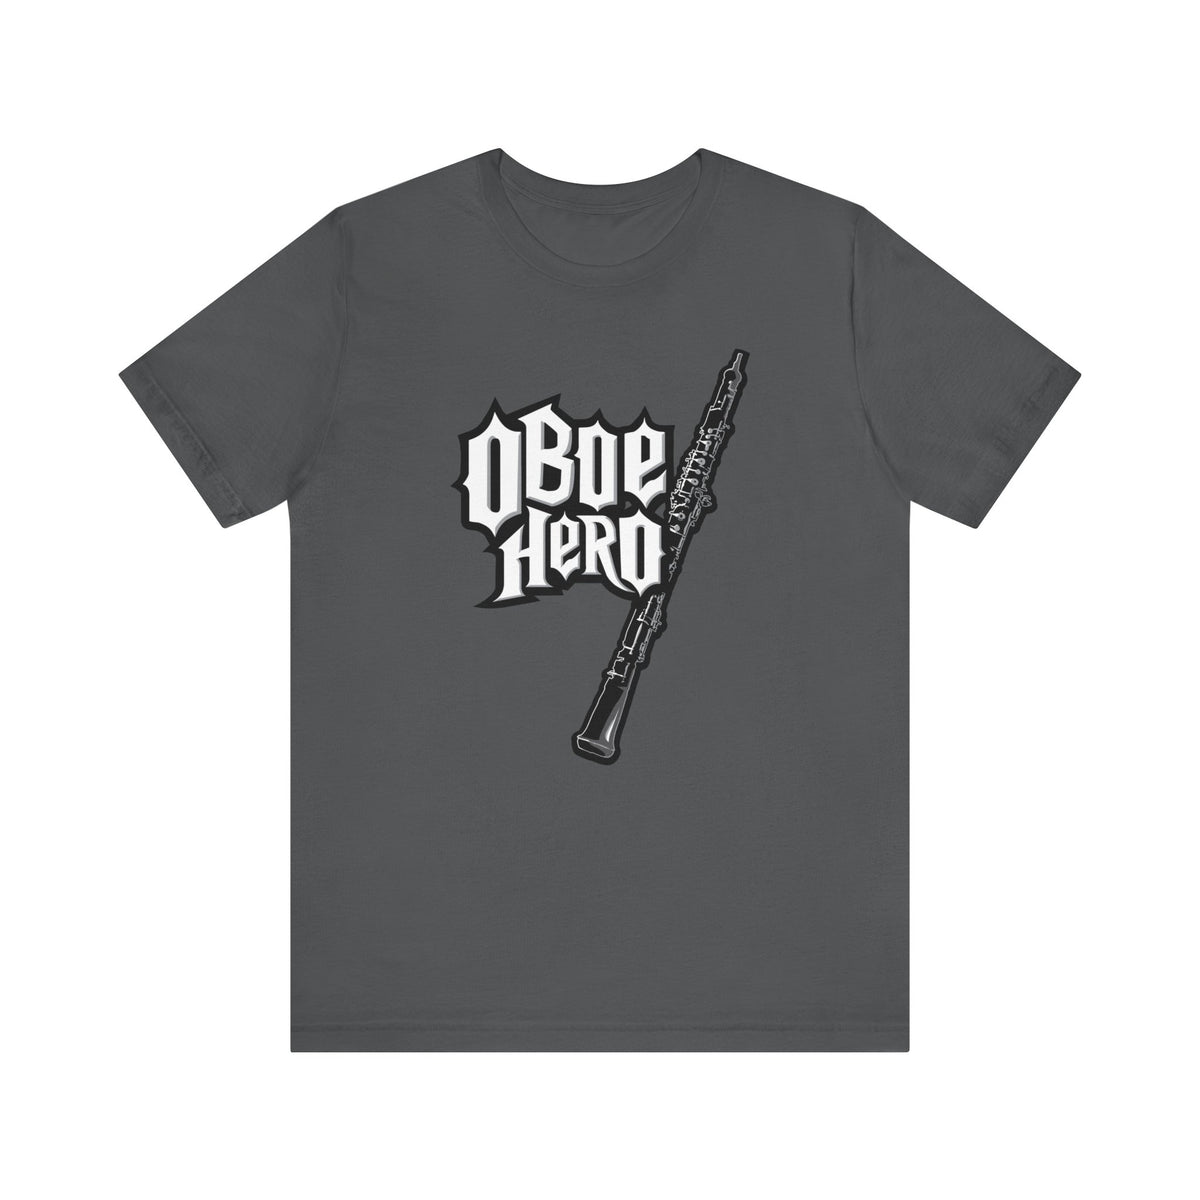 Oboe Hero - Men's T-Shirt